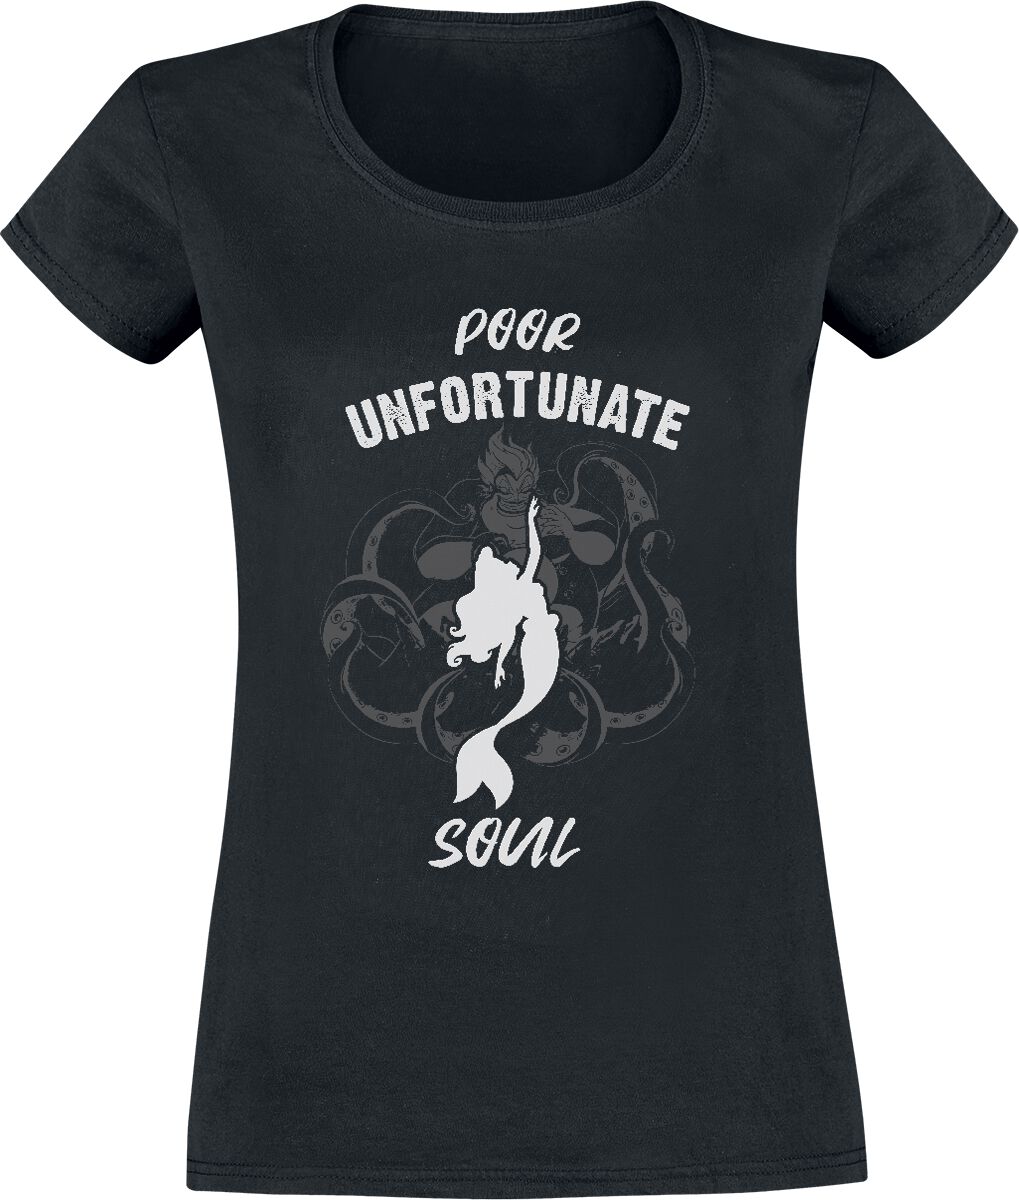 The Little Mermaid Unfortunate Soul T-Shirt black